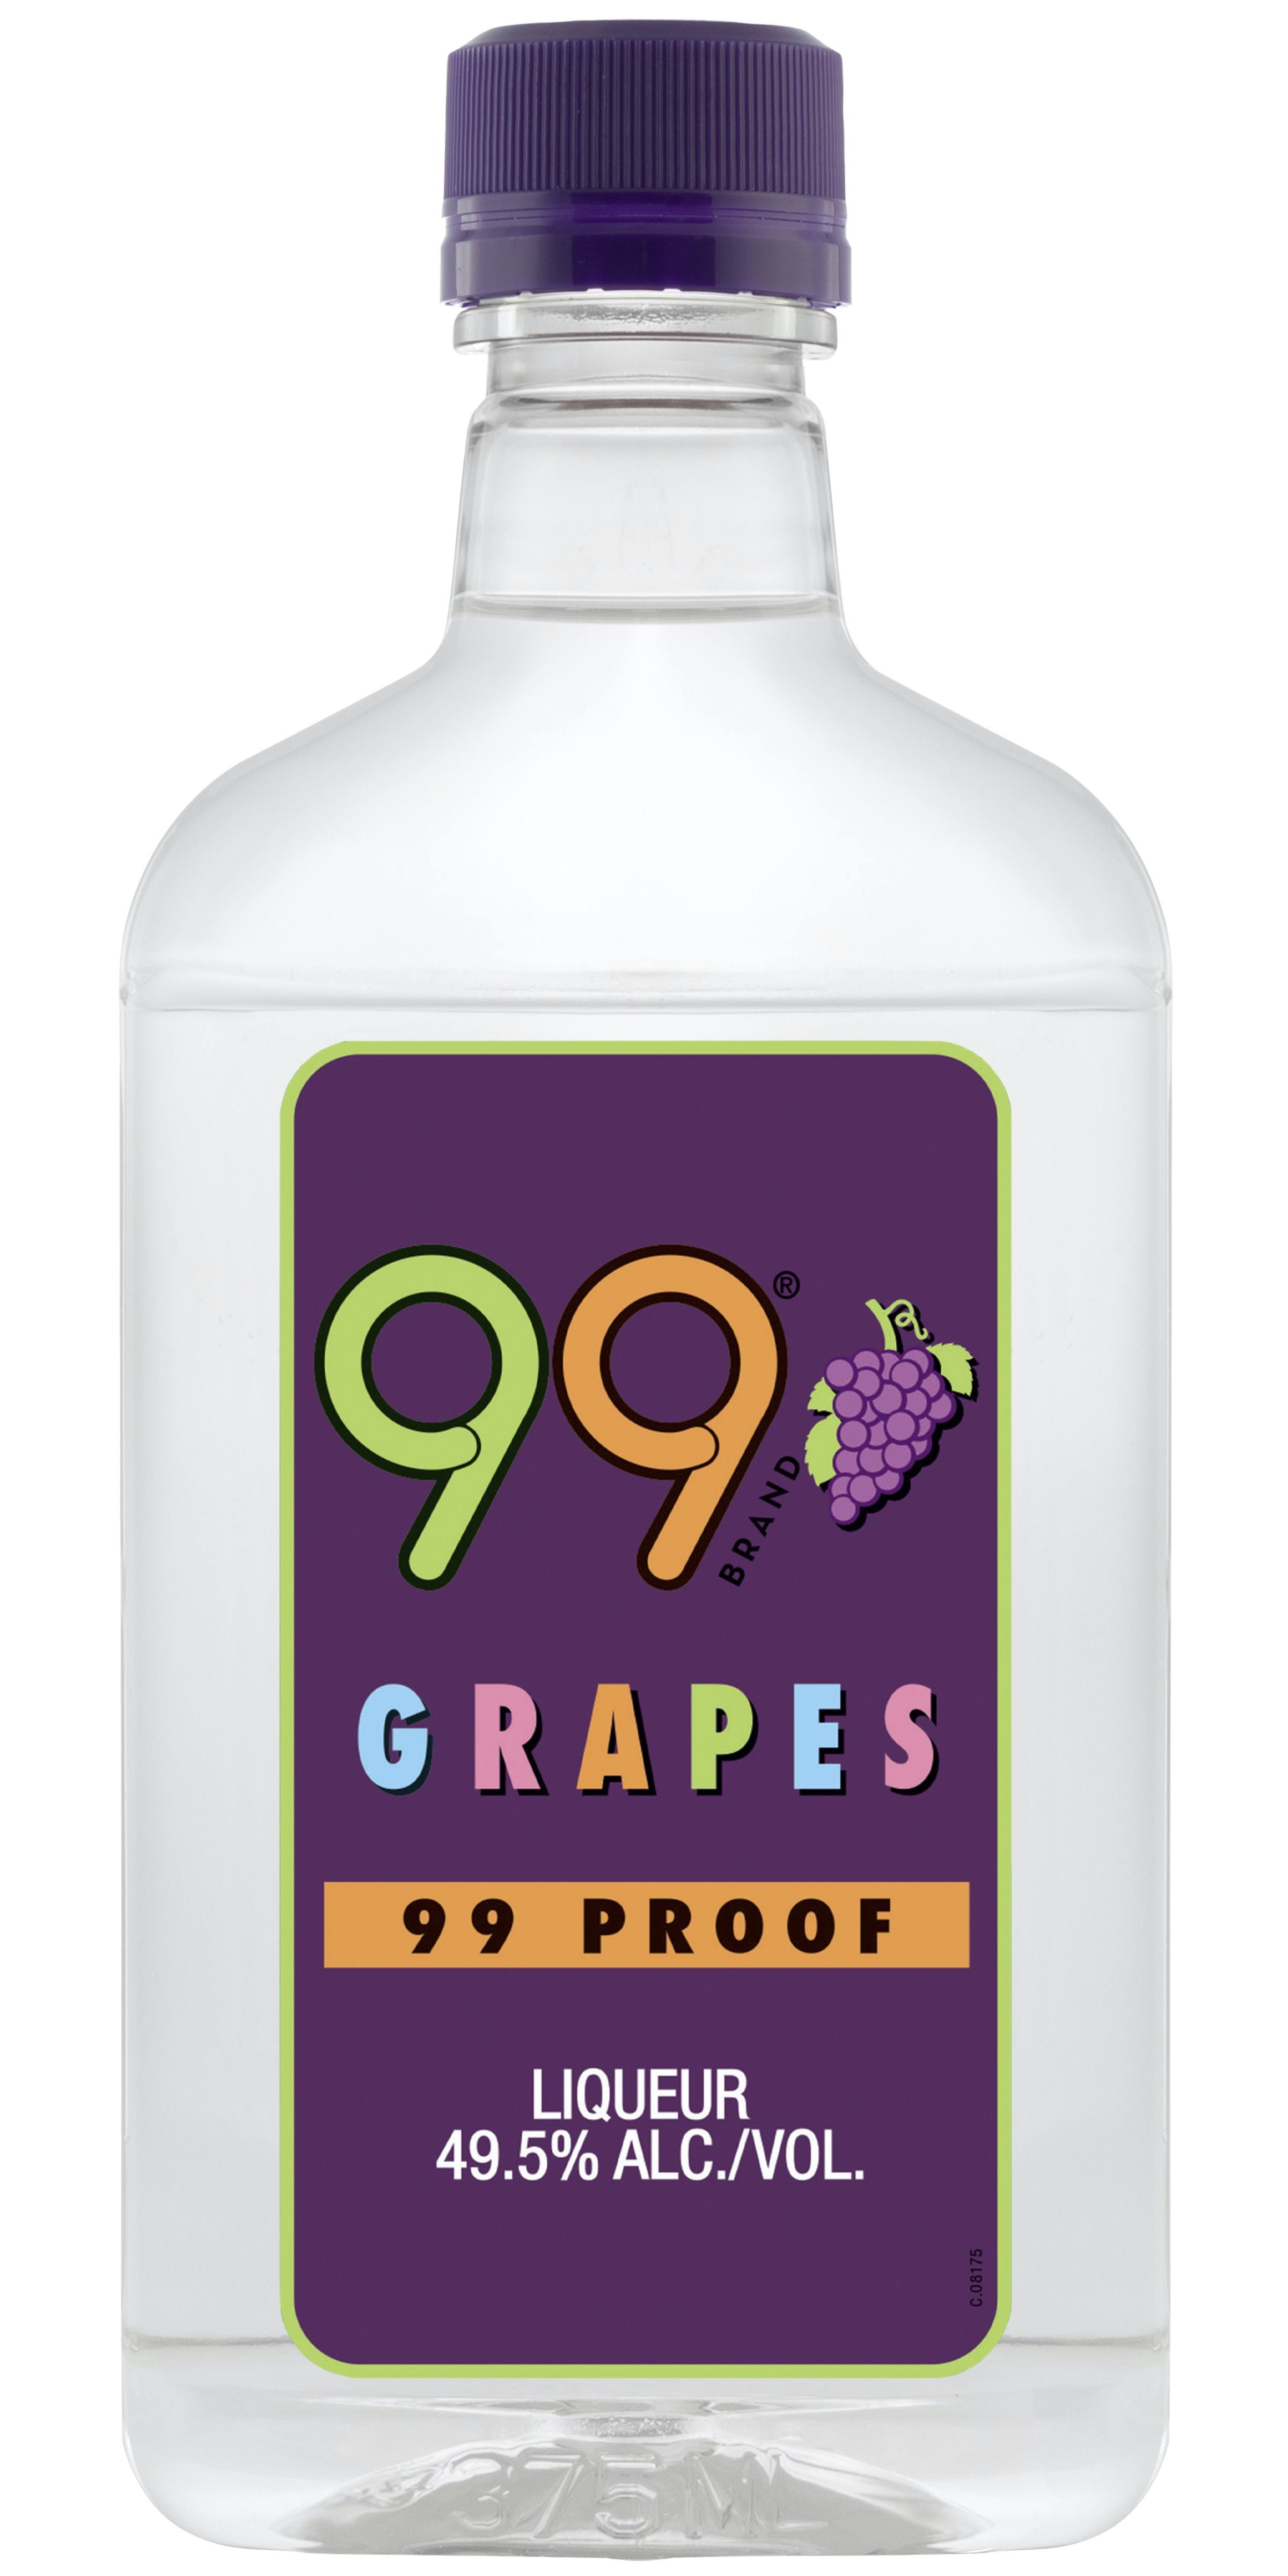 99 Grapes 375ml